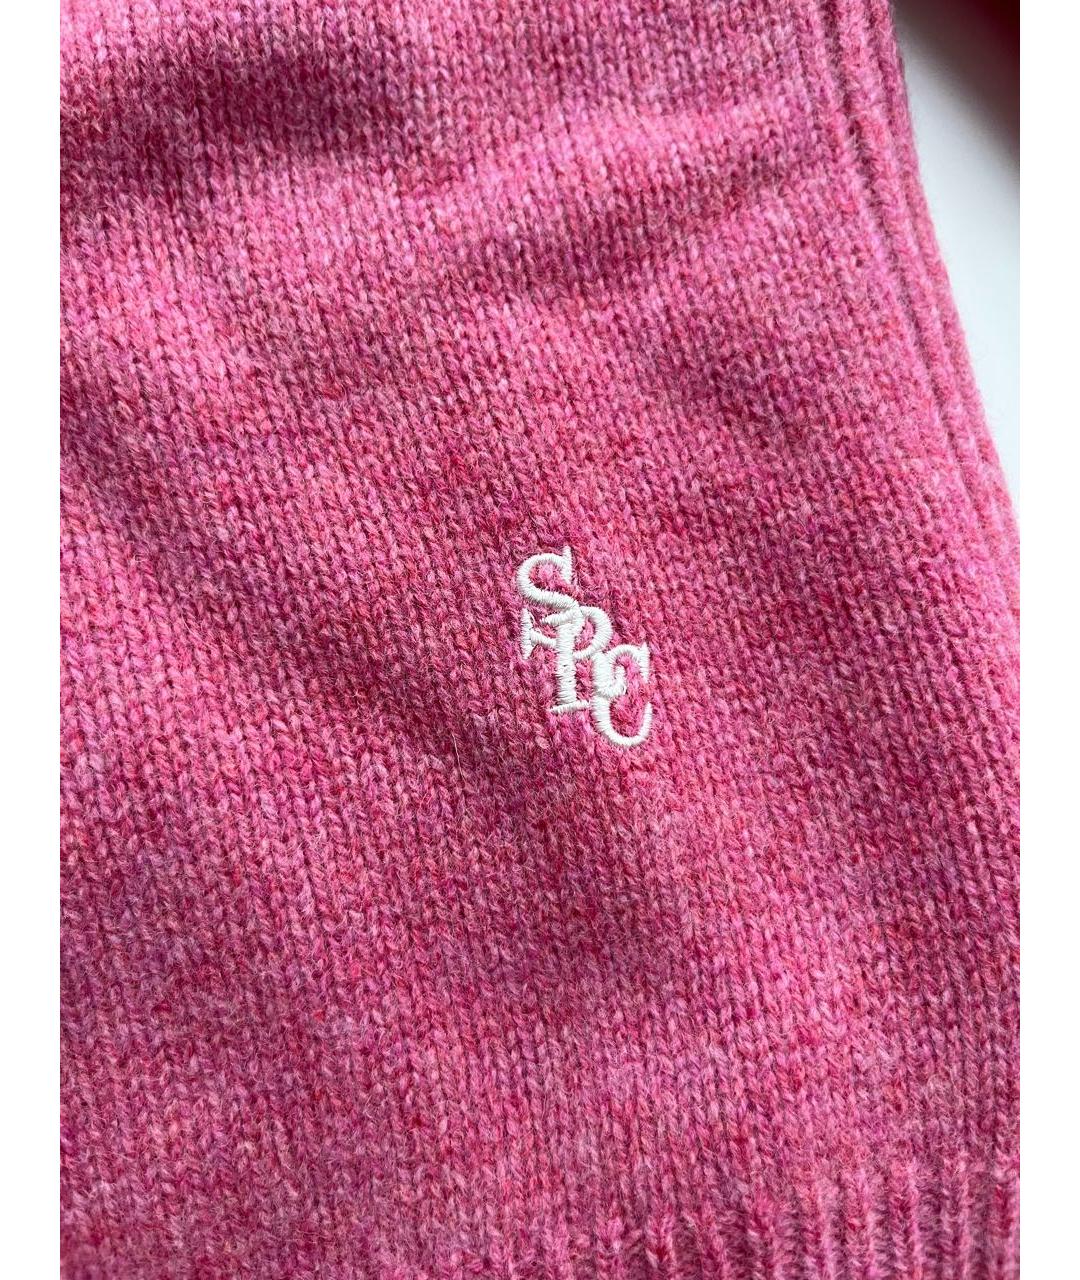 SPORTY AND RICH Розовый шерстяной джемпер / свитер, фото 3